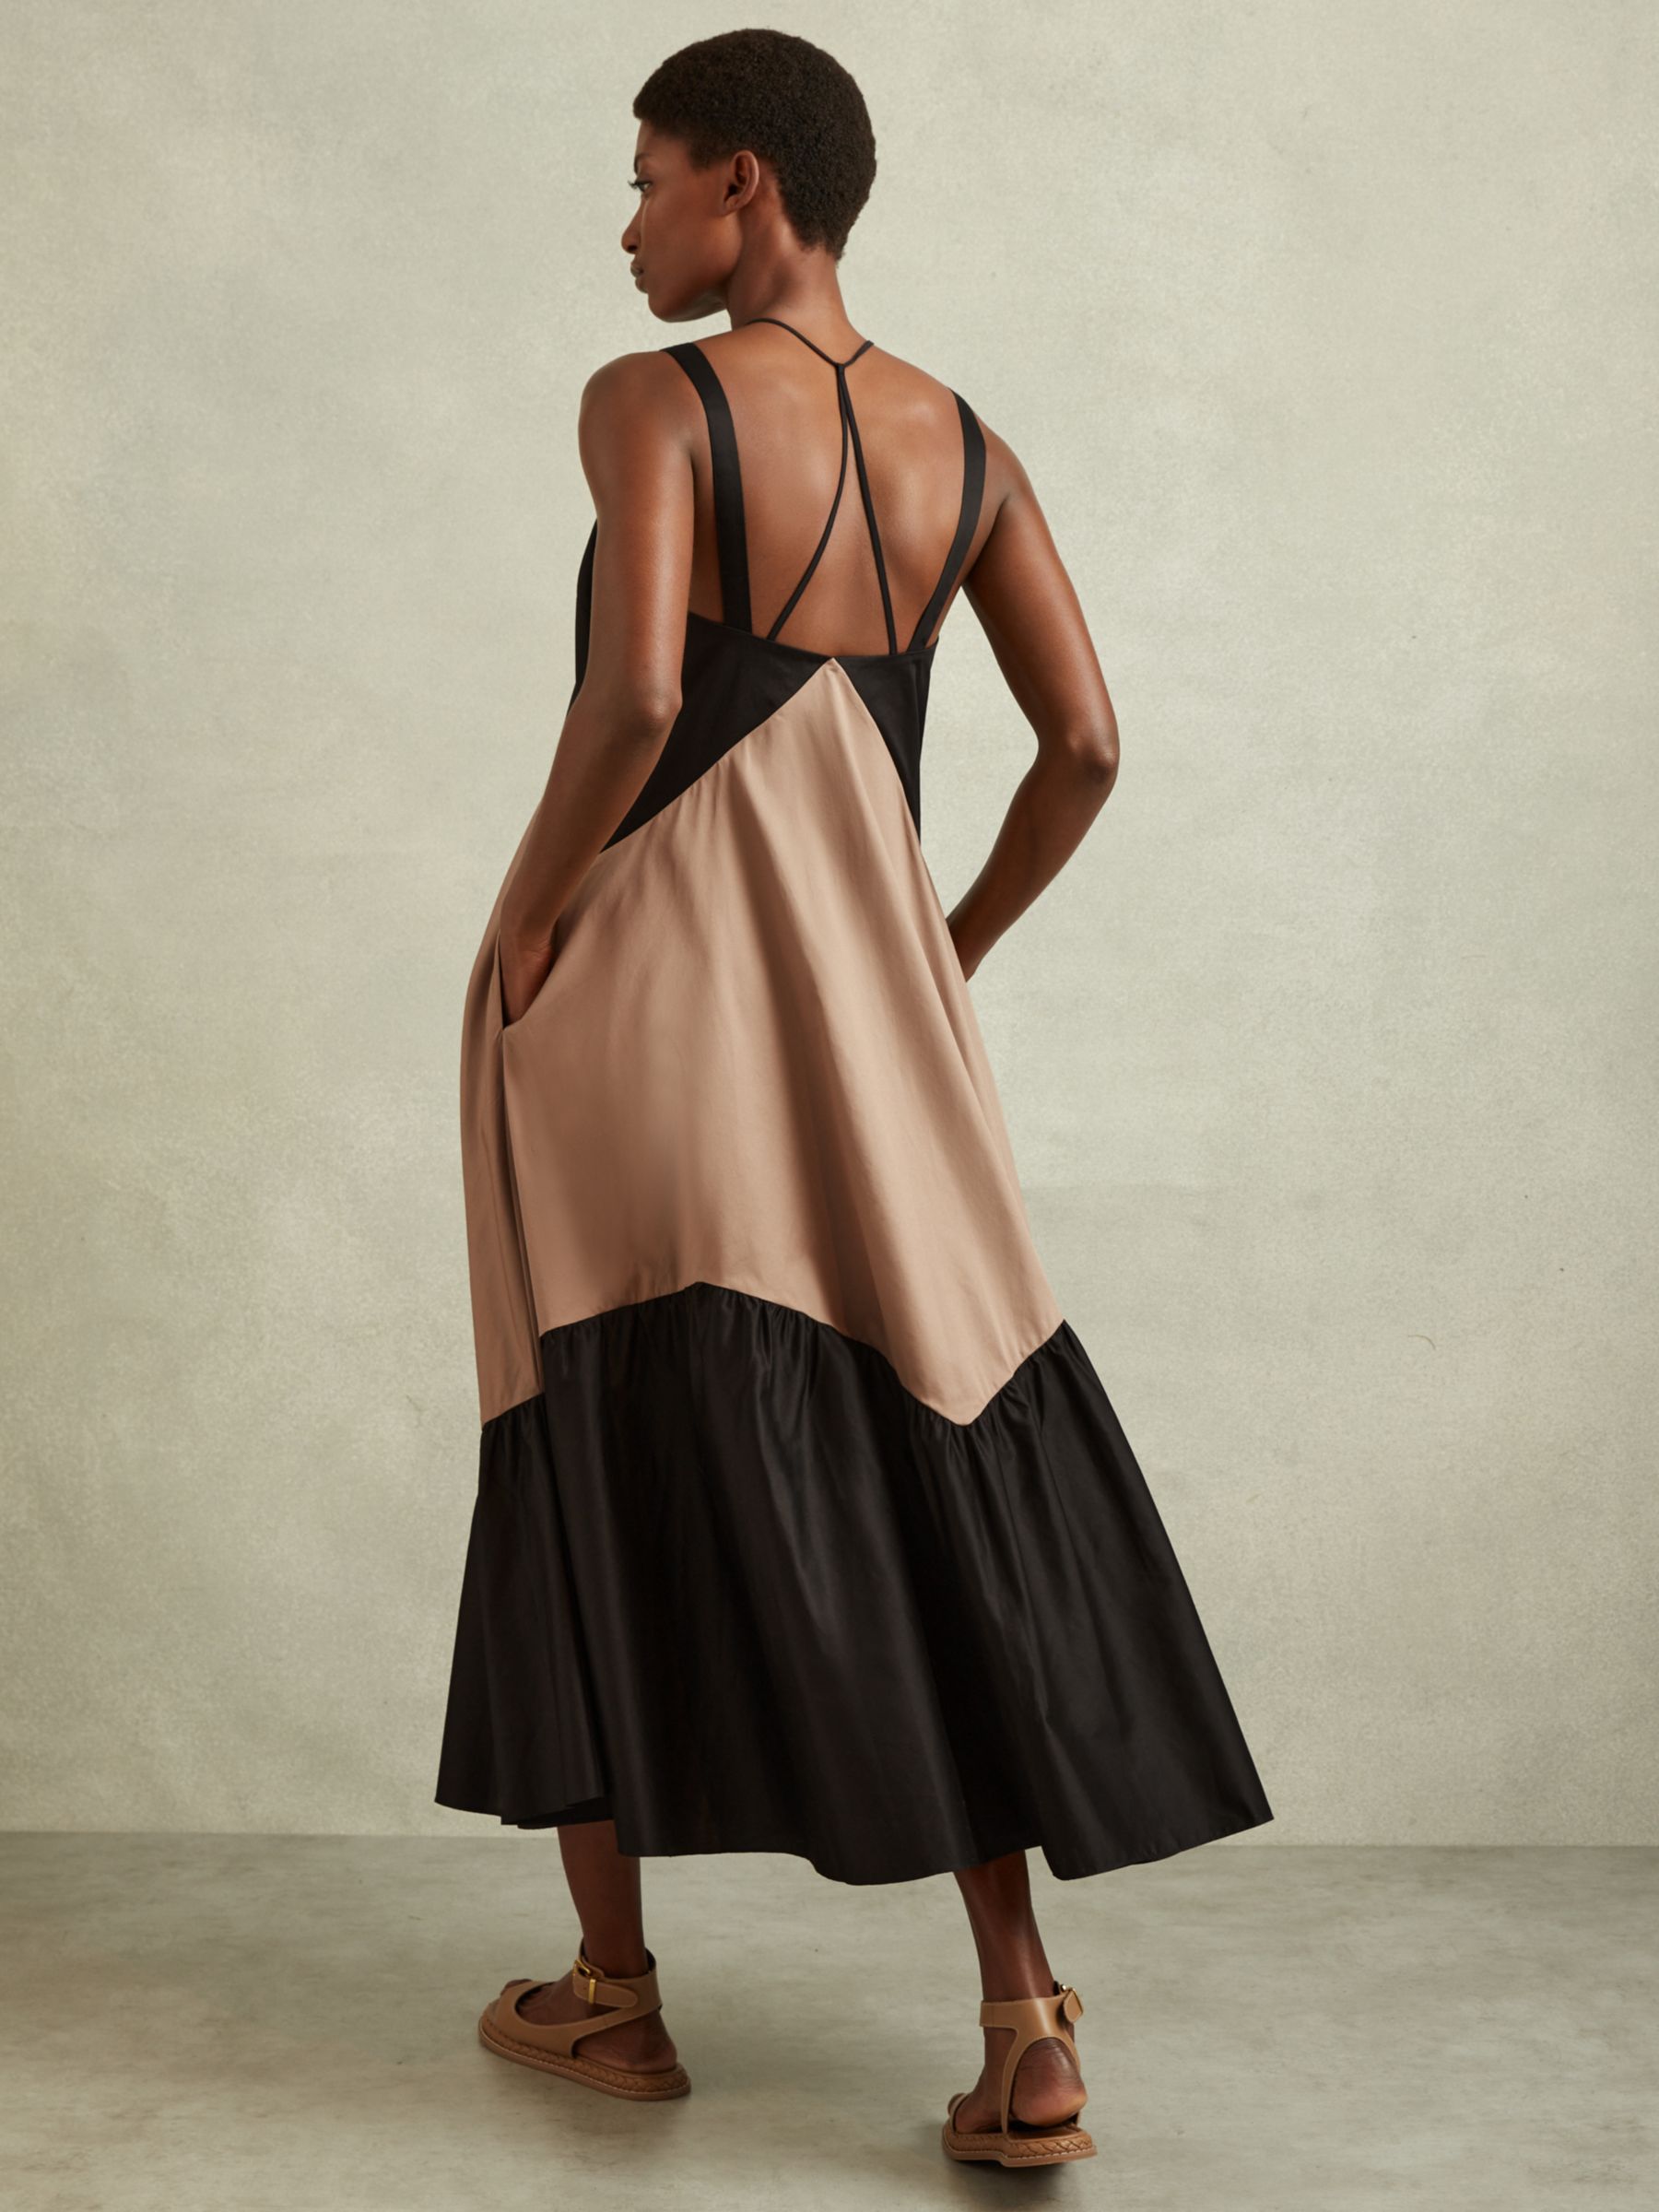 Reiss Natalie Colour Block Dress, Brown/Black, 6